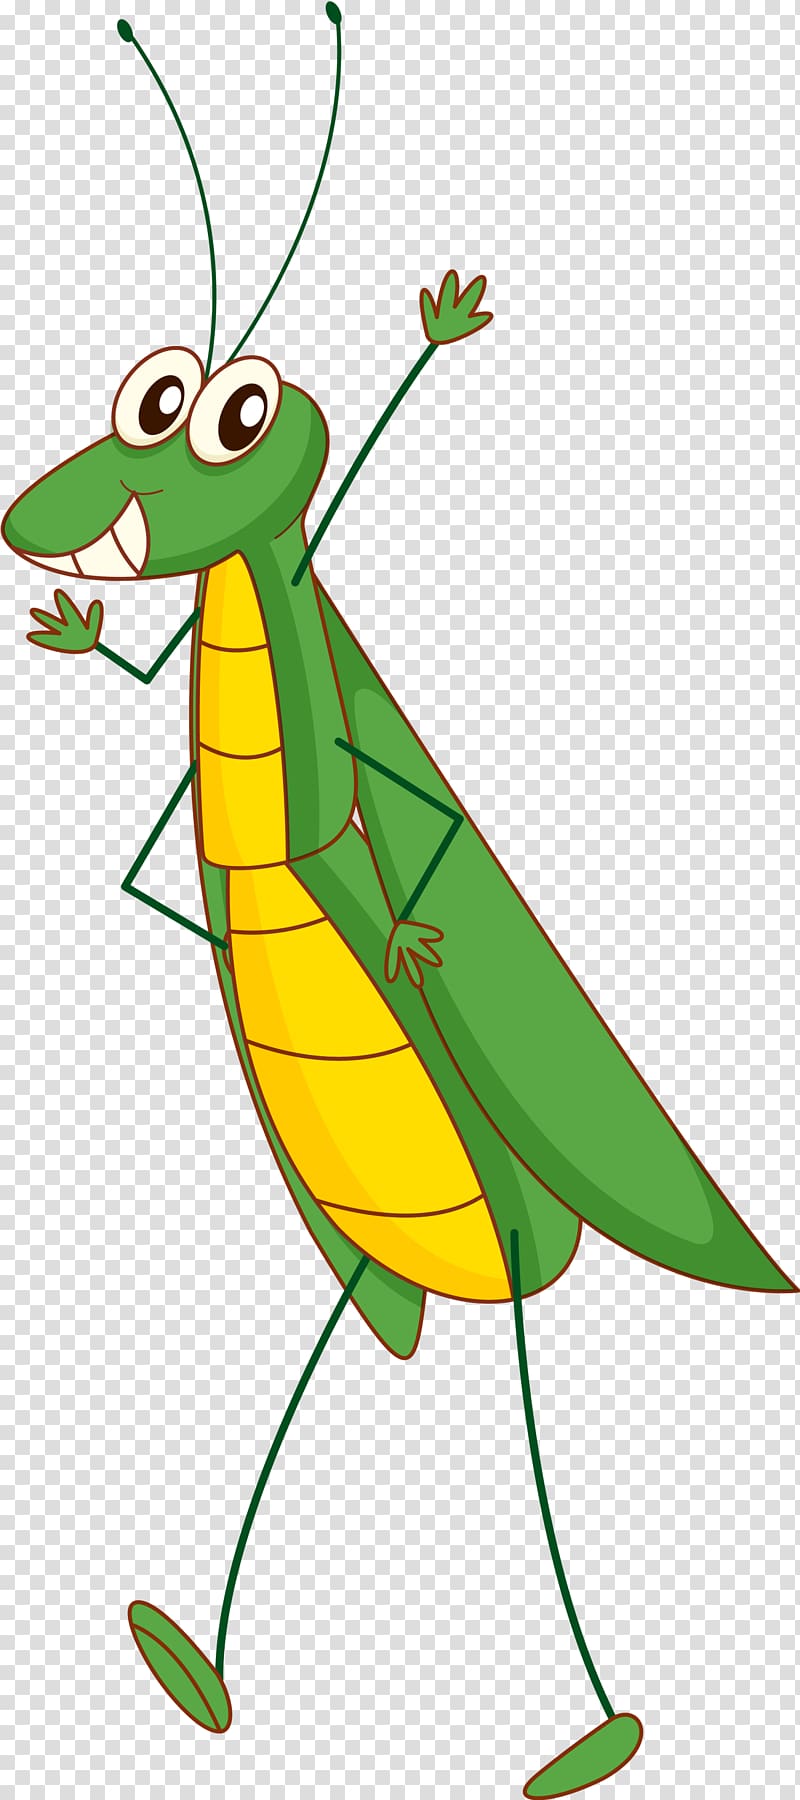 Insect Grasshopper , Cartoon Green Grasshopper transparent background PNG clipart